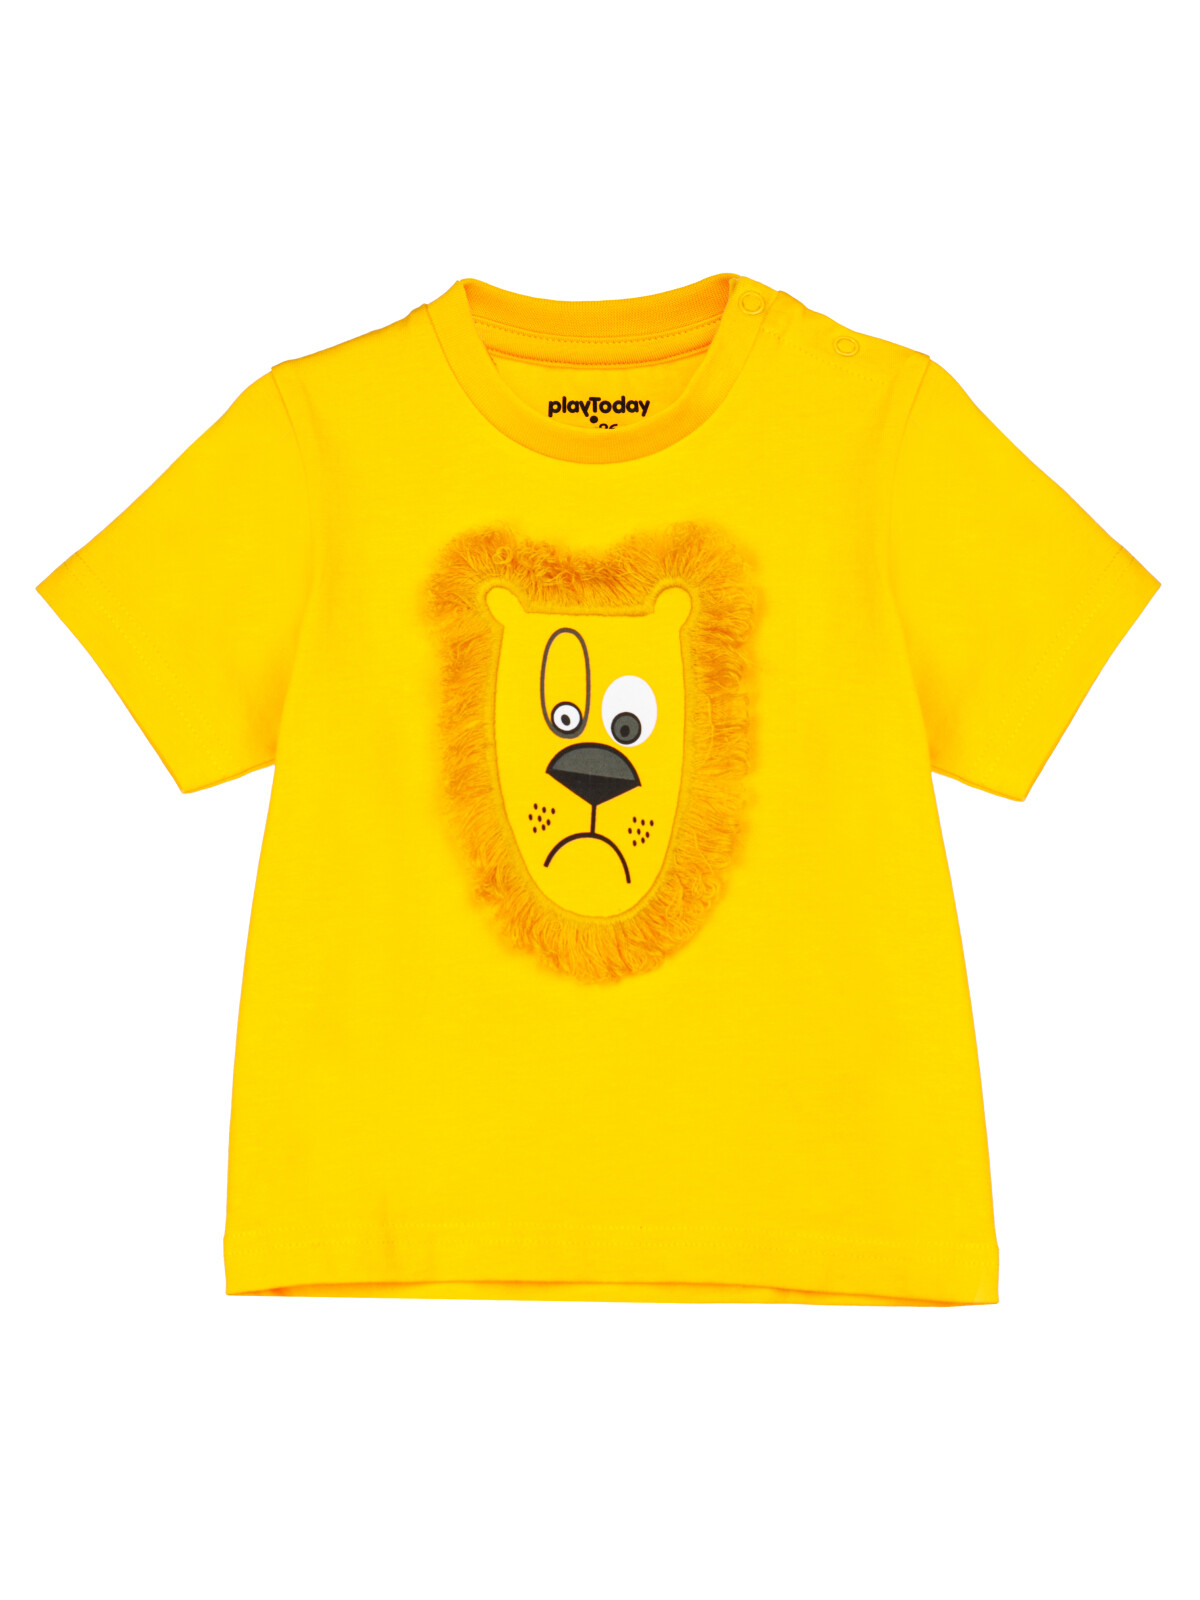 Фуфайка детская (футболка) PlayToday 12419132, жёлтый, 80